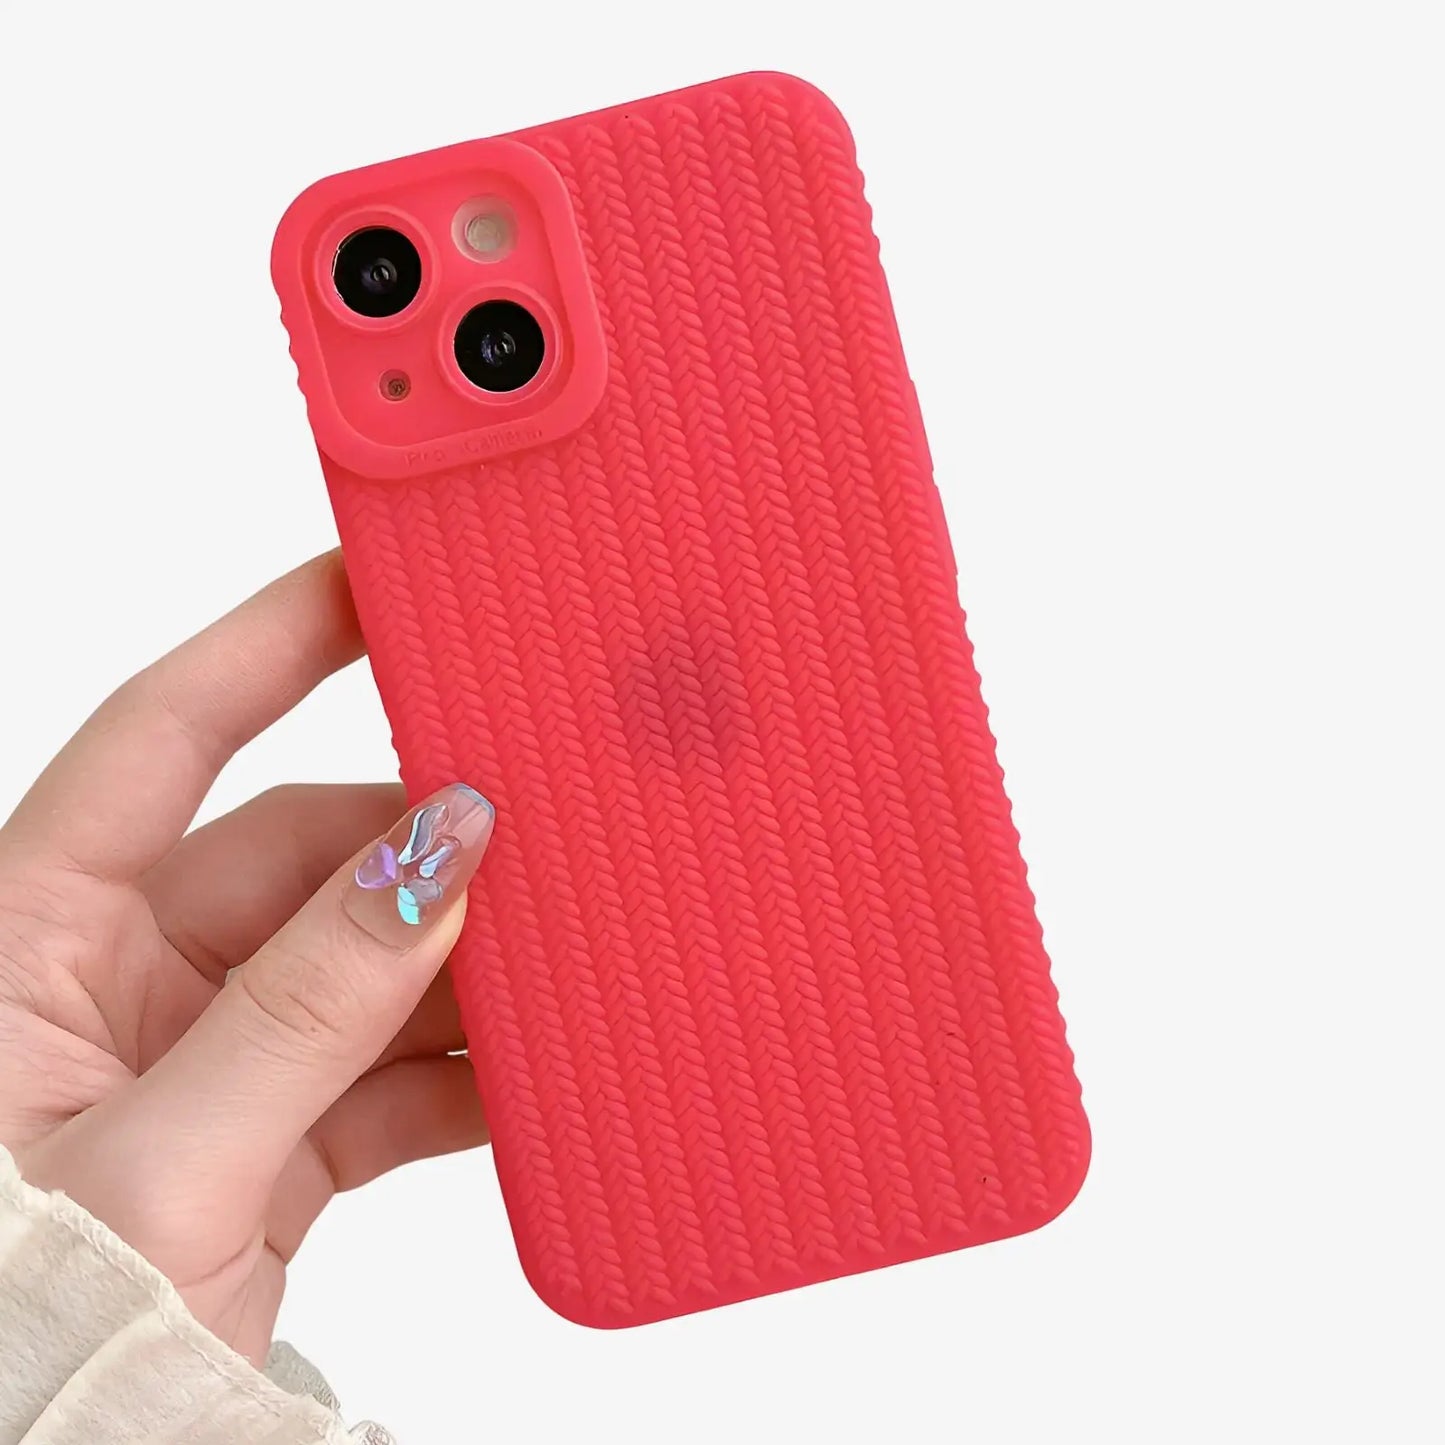 Coque iPhone rouge texture tresse